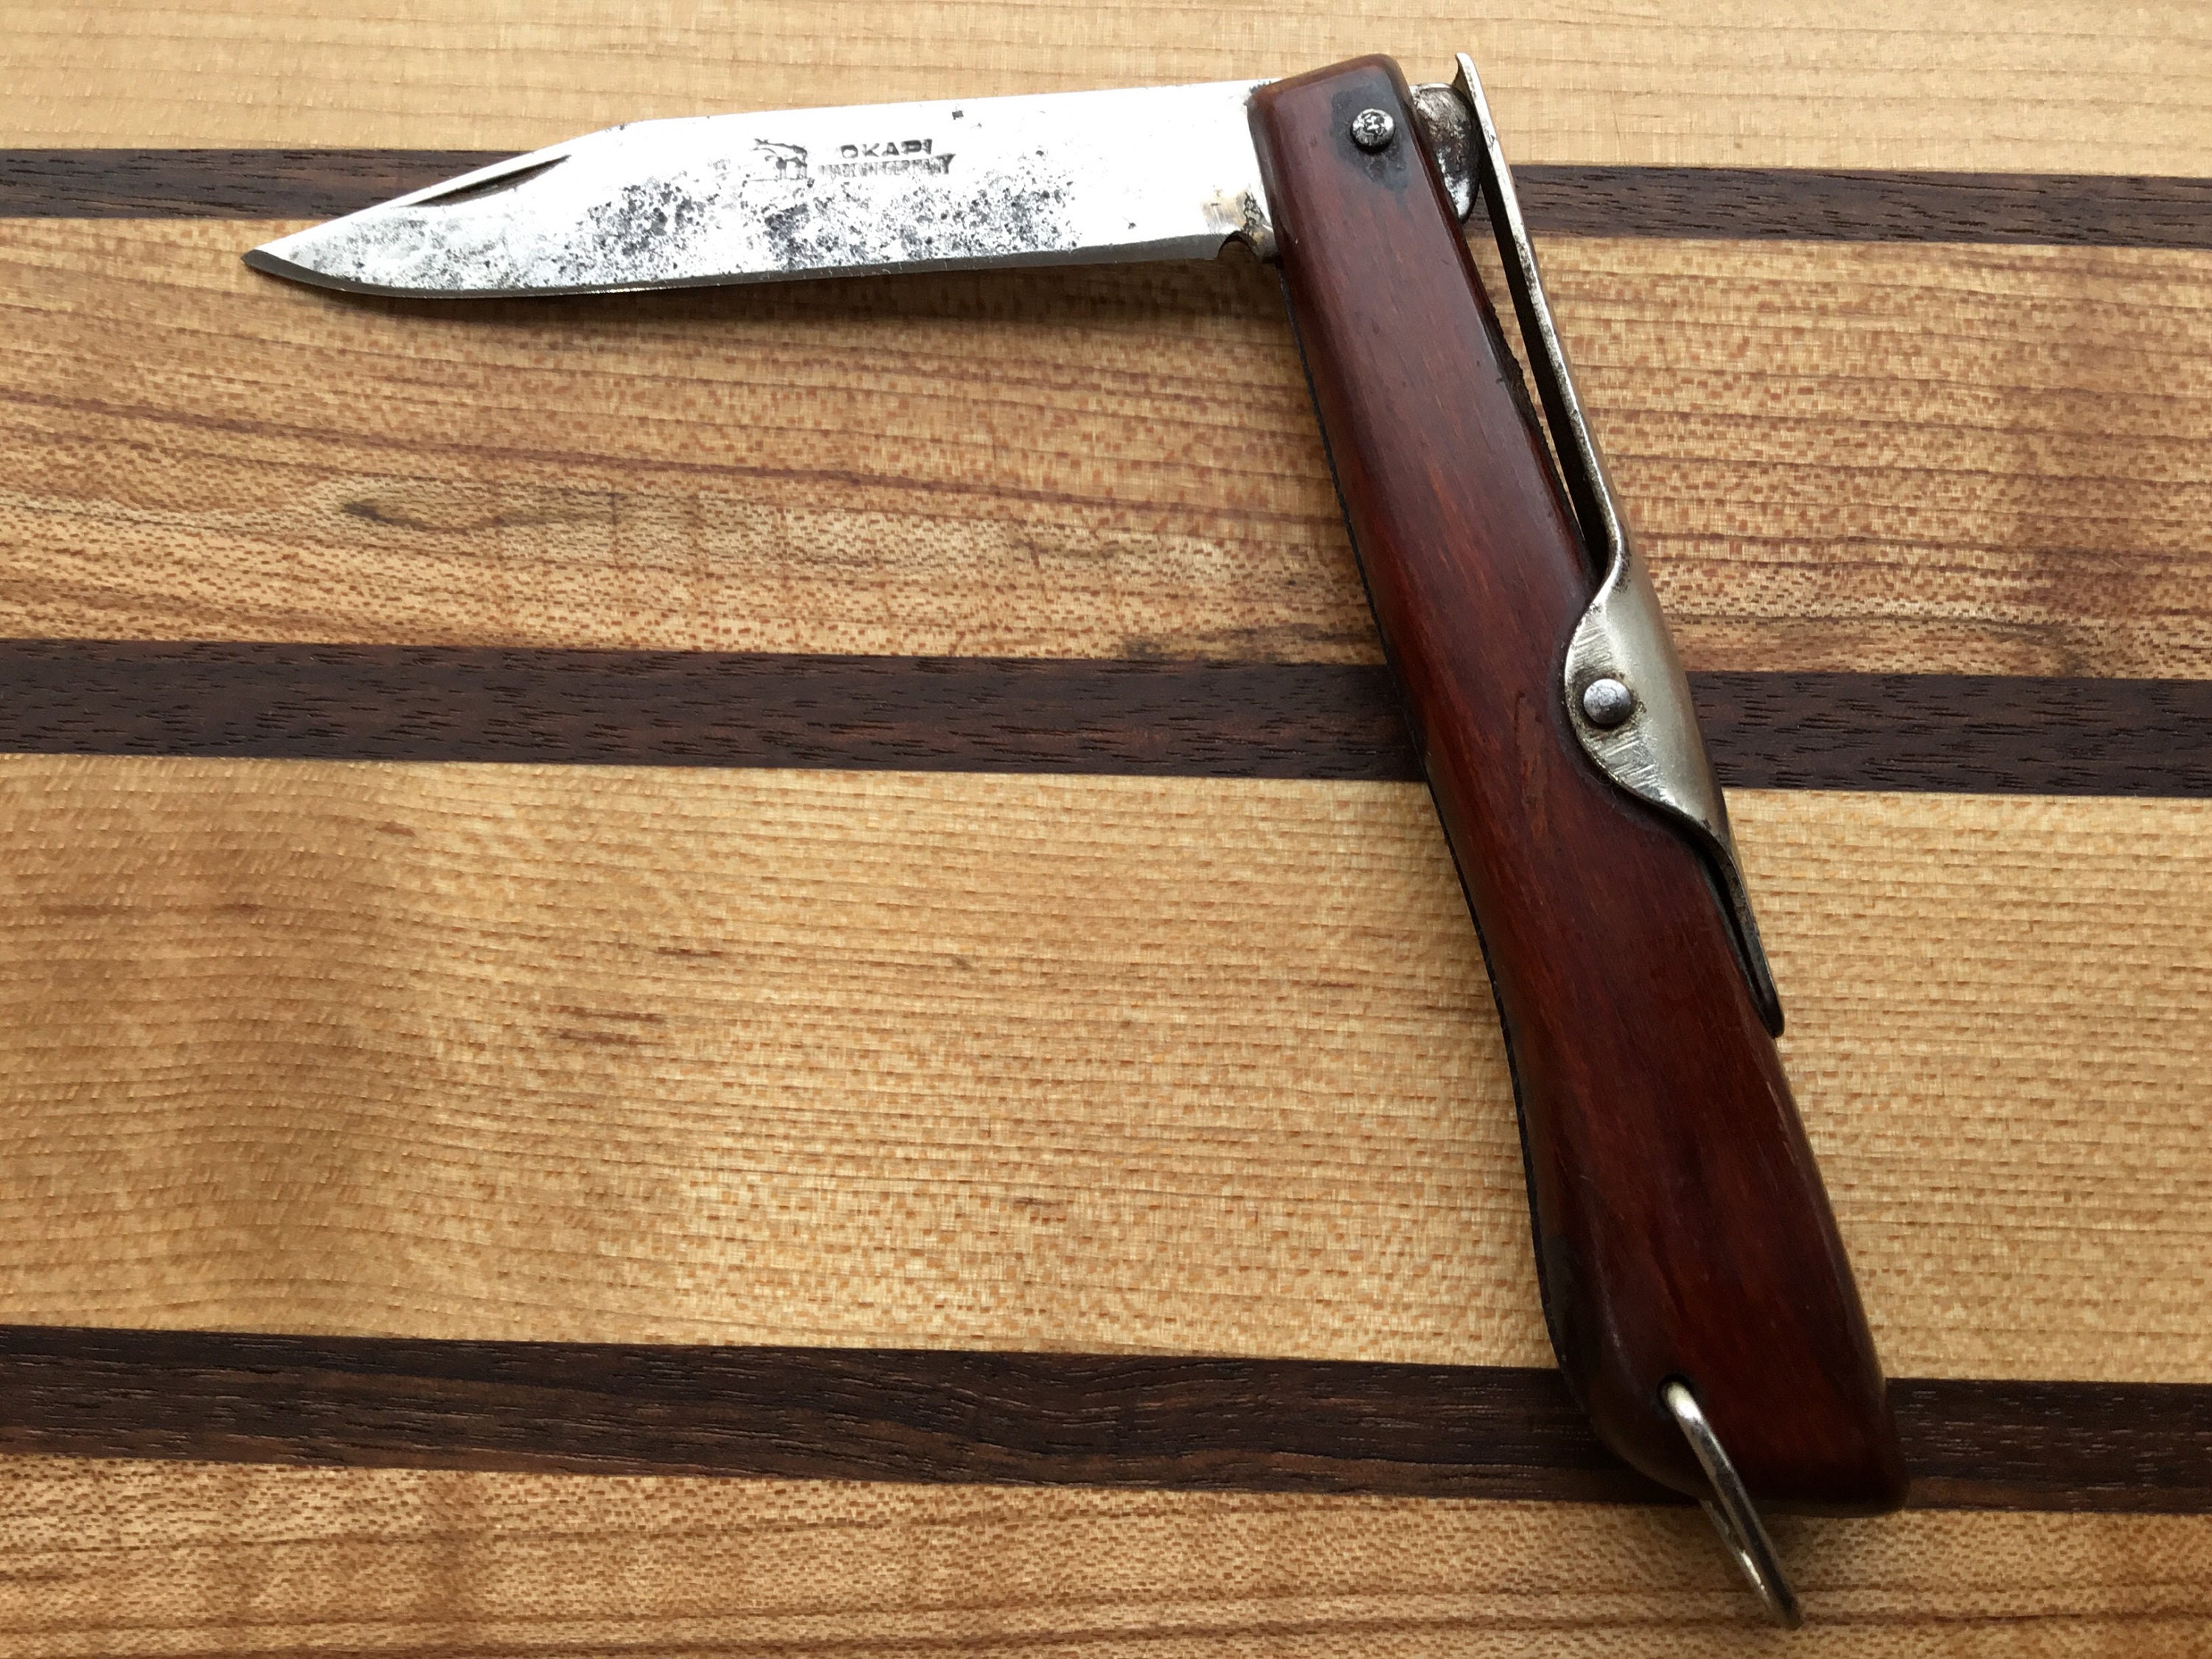 OLD OKAPI KNIFE MADE IN GERMANY FOLDING UTILITY POCKET KNIFE PAPER